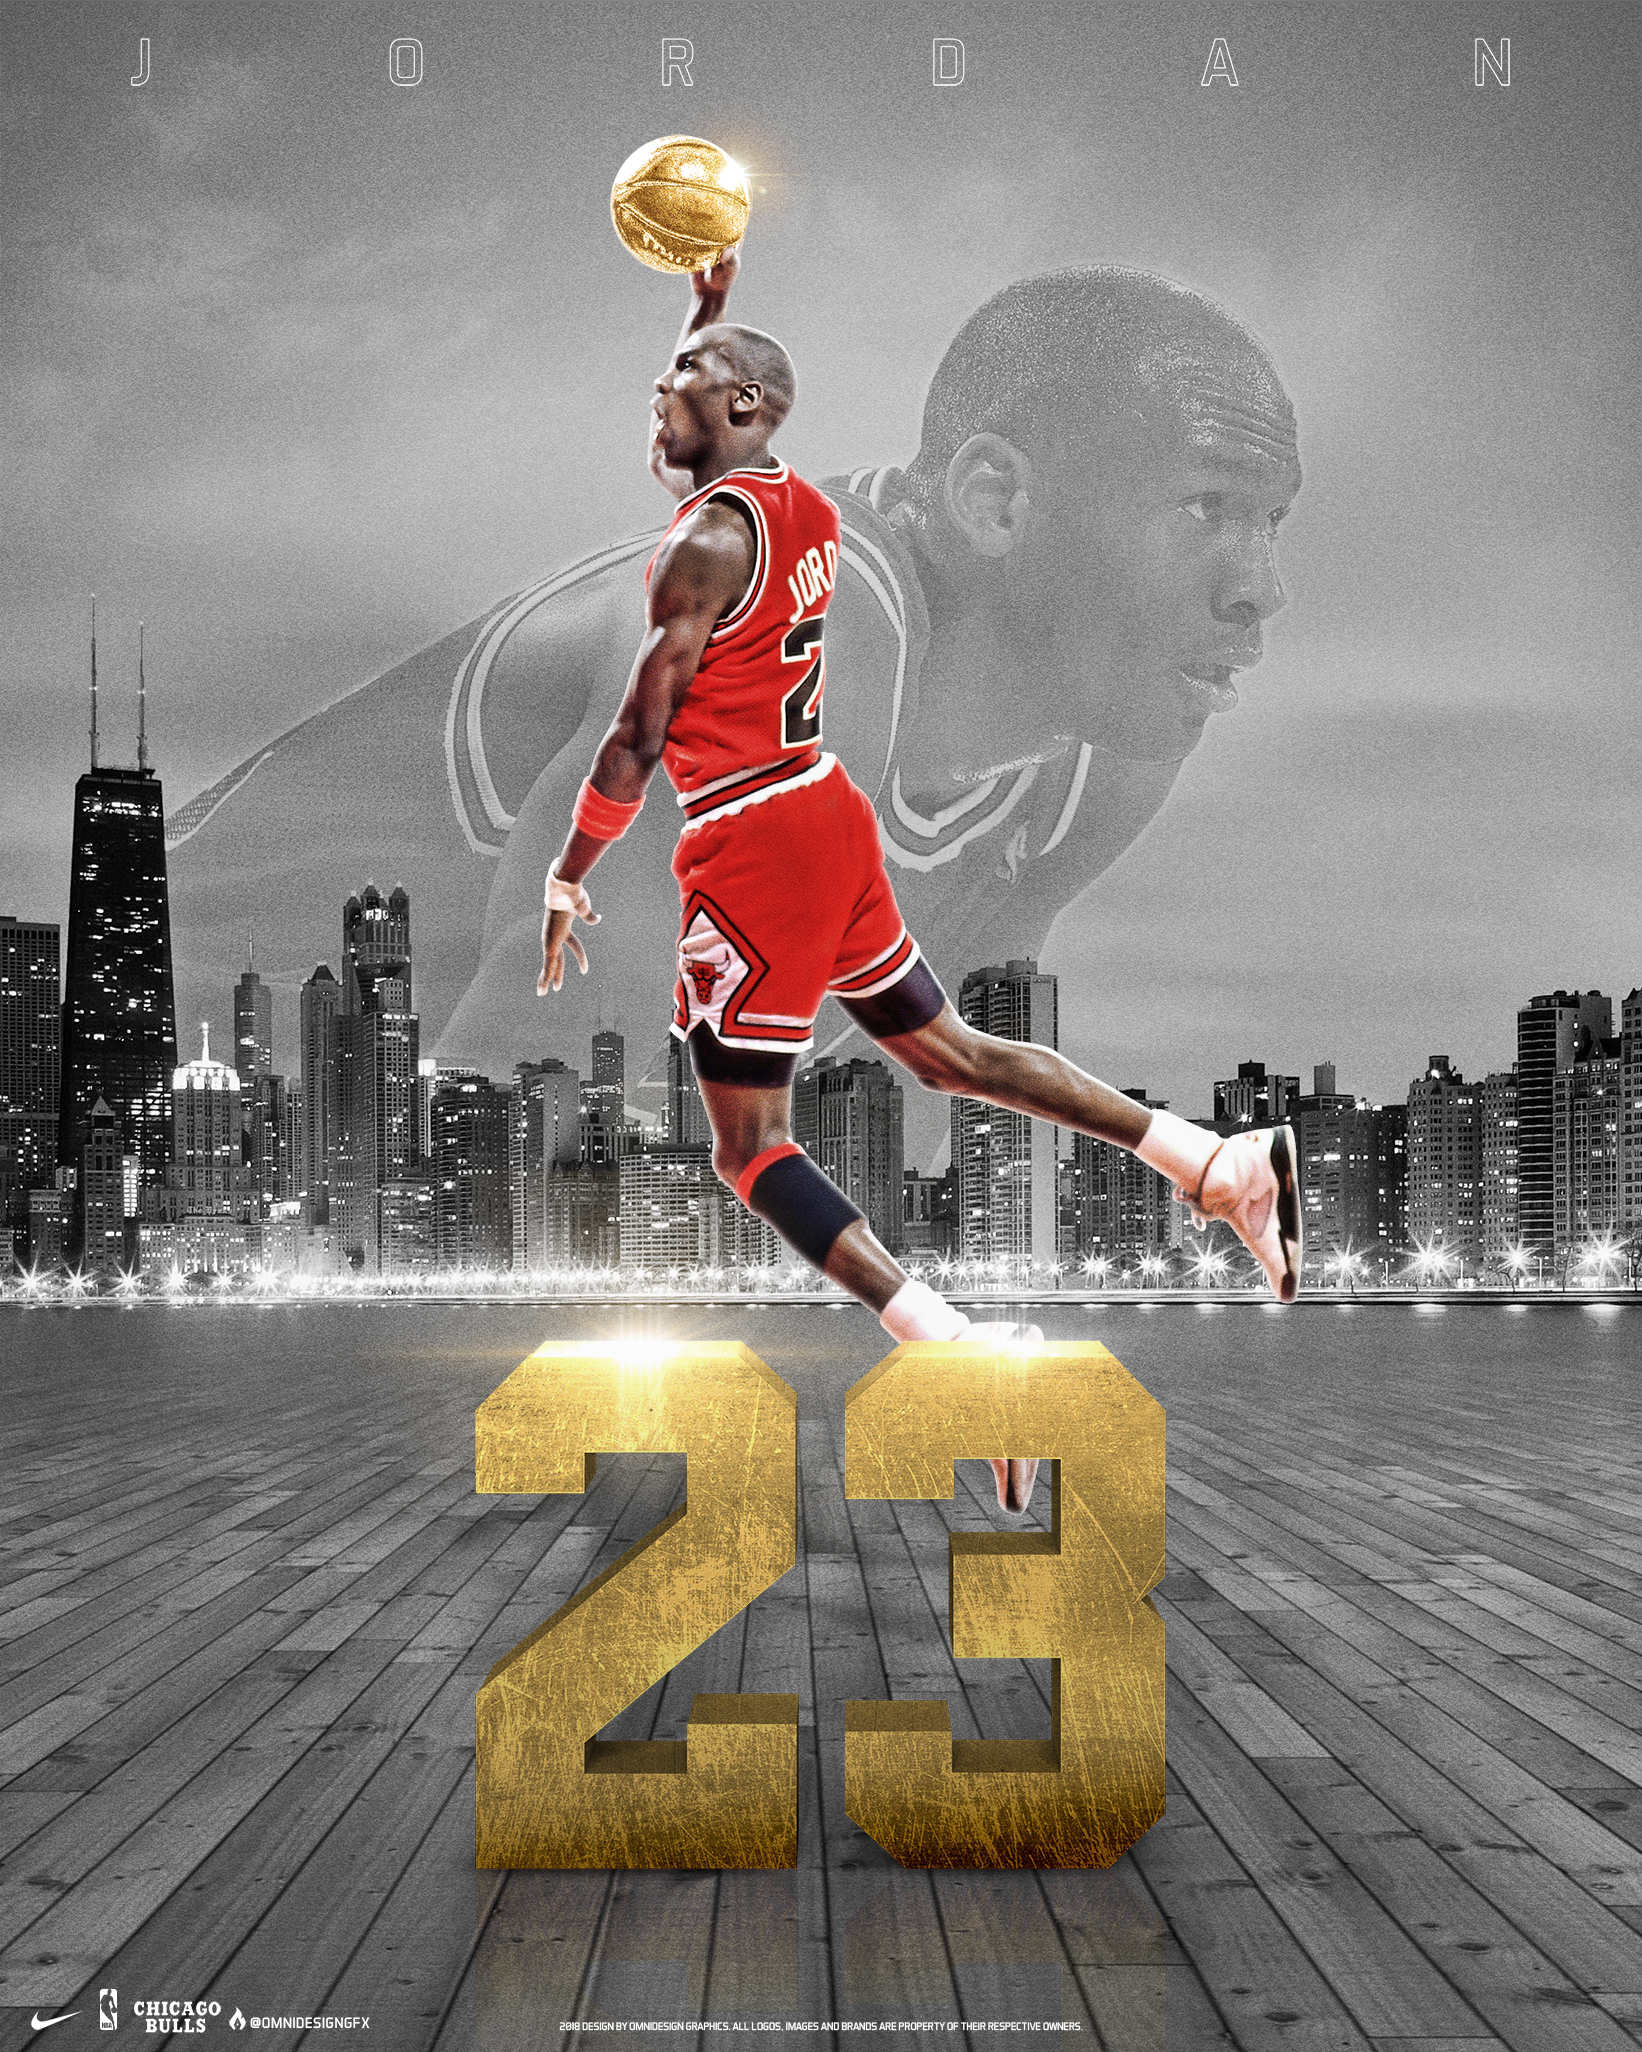 michael jordan MJ air jumpman chicago bulls poster basketball NBA.